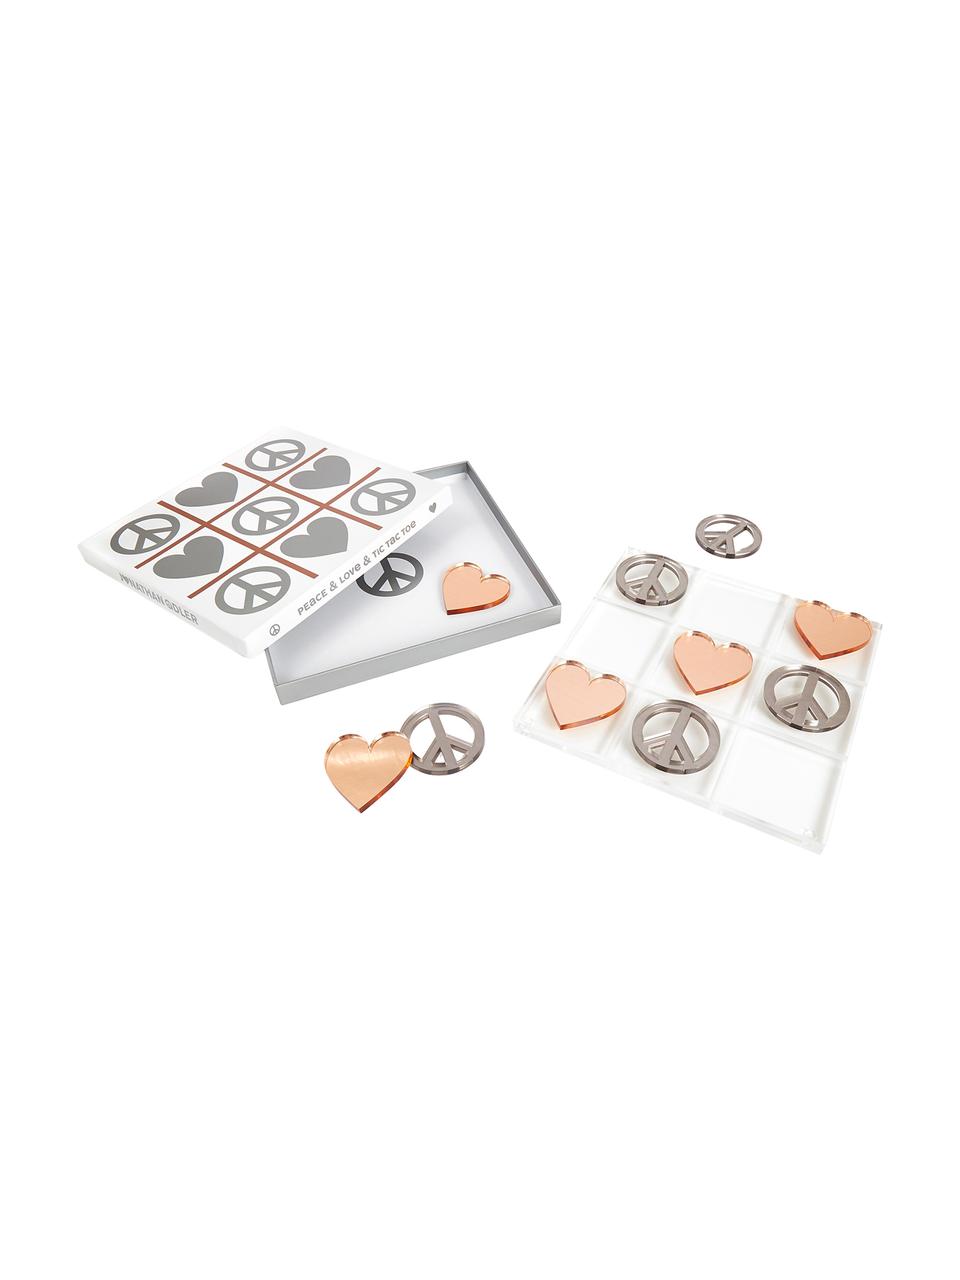 Bordspel Love & Peace Tic Tac Toe, 100% acrylglas, Speelstenen: zilverkleurig, koperkleurig. Speelbord: transparant, 26 x 26 cm